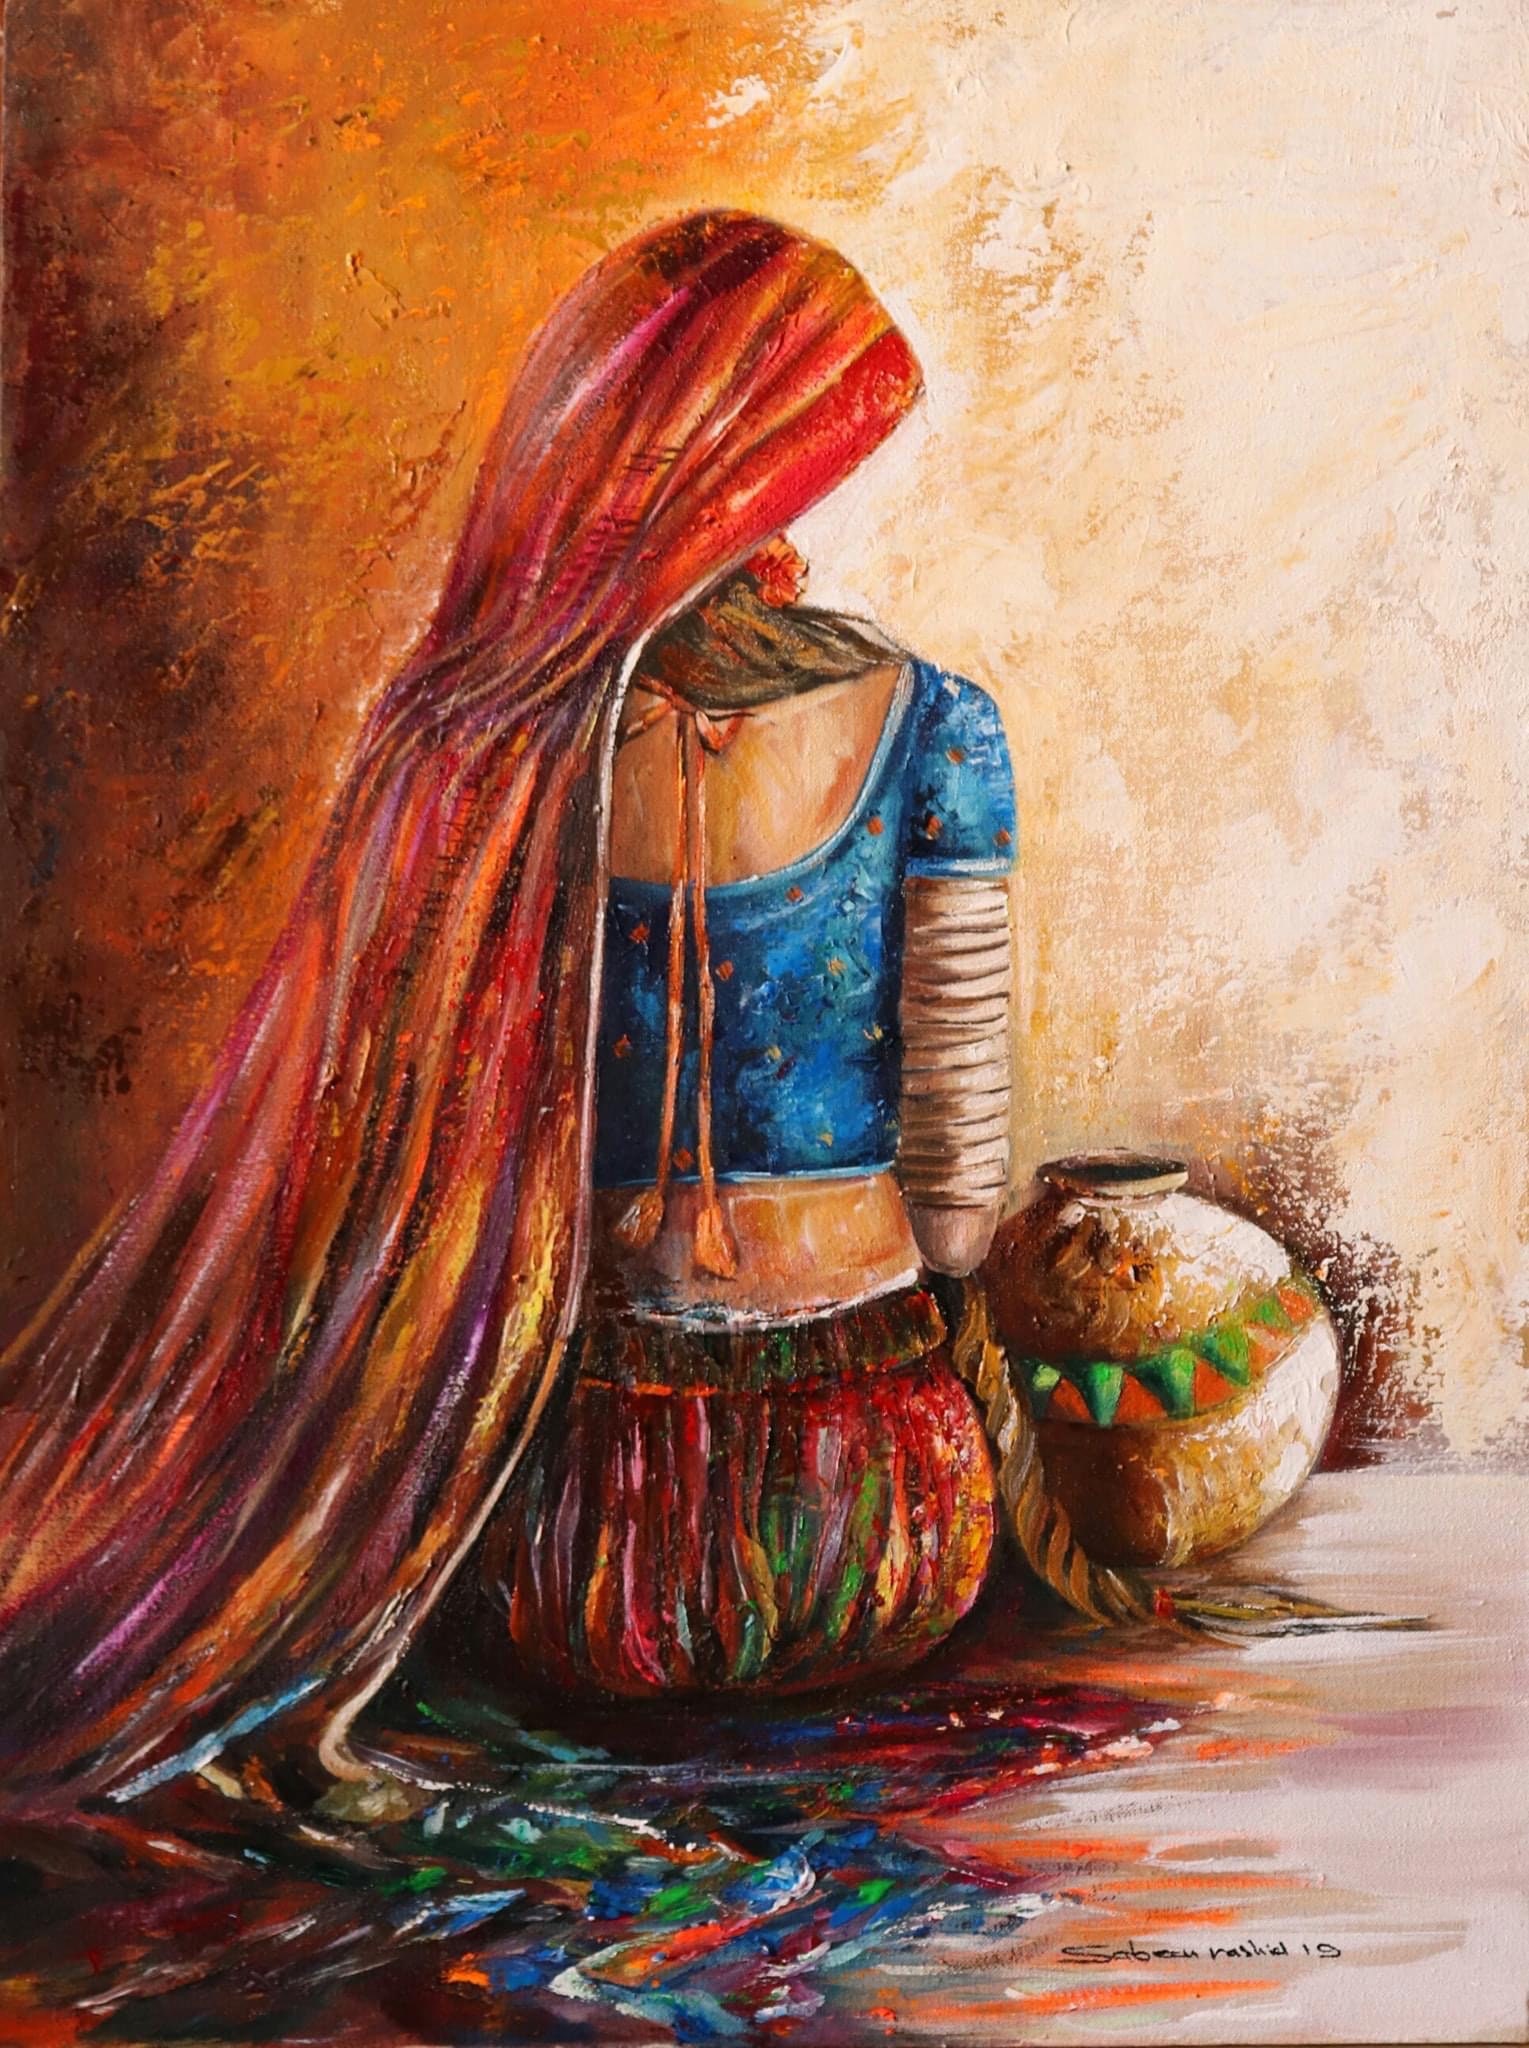 South Asian Woman II Handmade Oil Painting